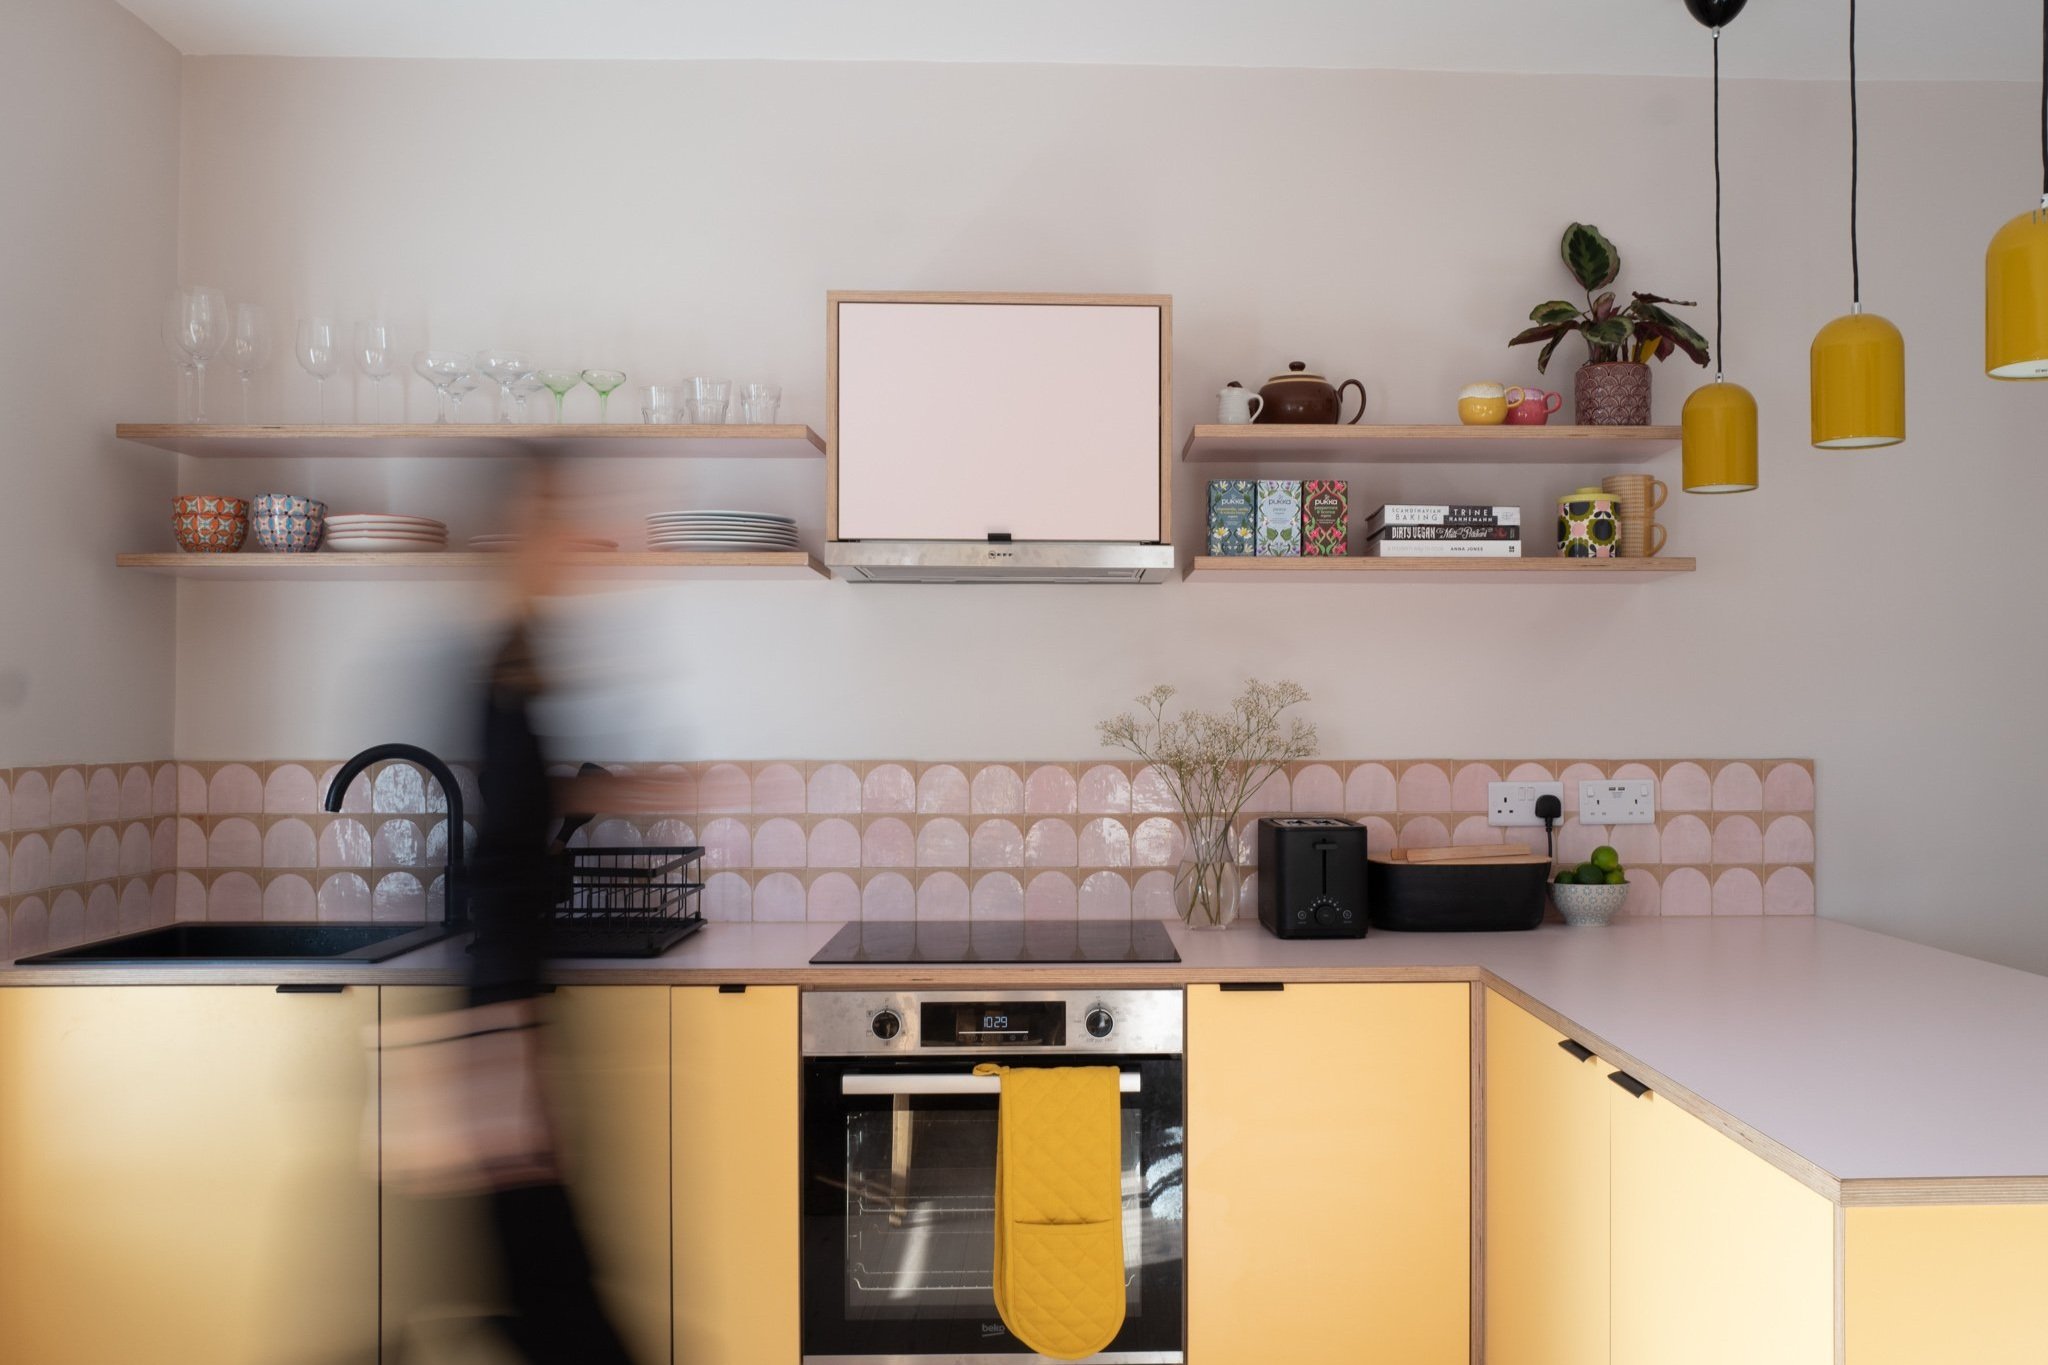 romy-france-interior-design-17-Park-cresent-kitchen-Naomi2.jpg